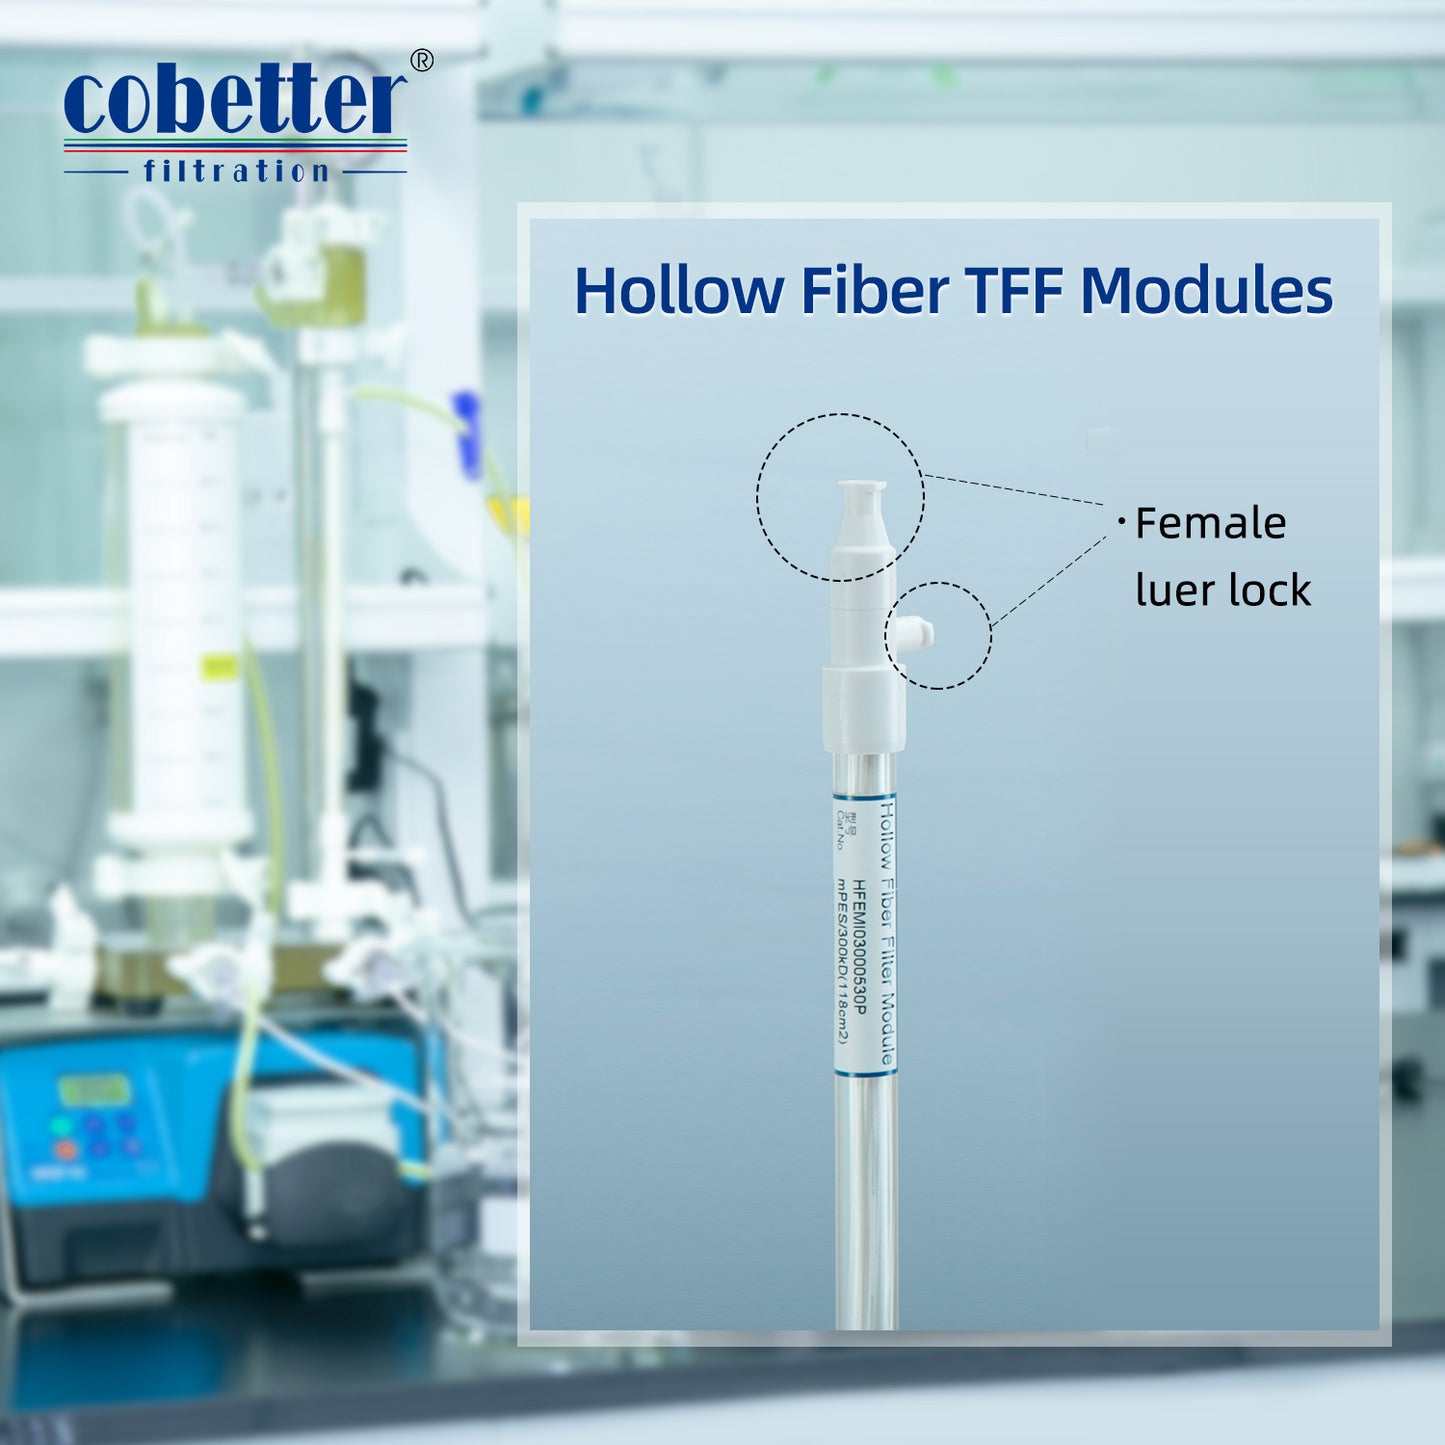 COBETTER 0.5mm Lab Hollow Fiber TFF, mPES